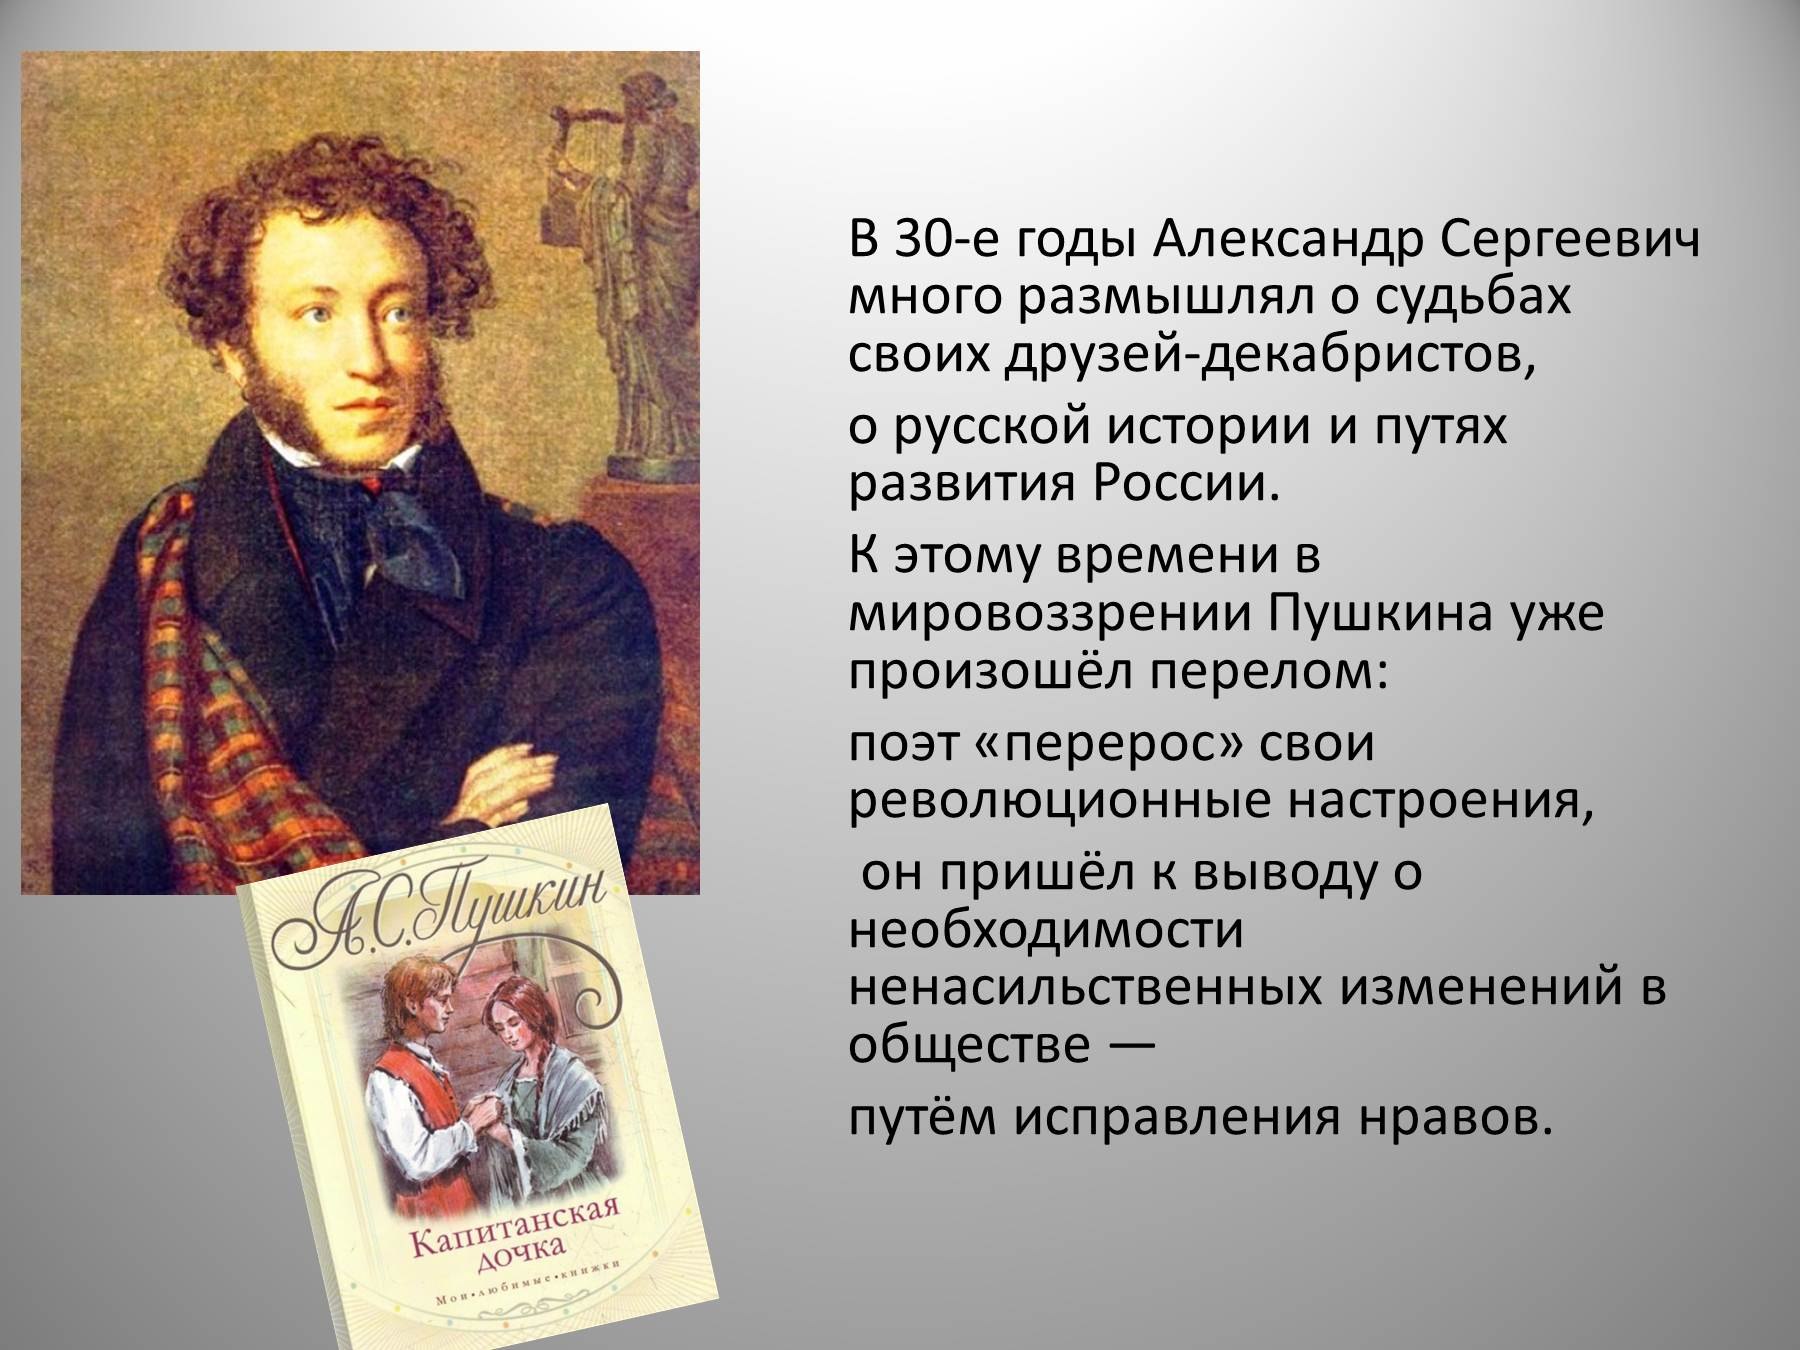 Когда размышлять о судьбах. Пушкин. Биография Пушкина. Пушкин и декабристы.